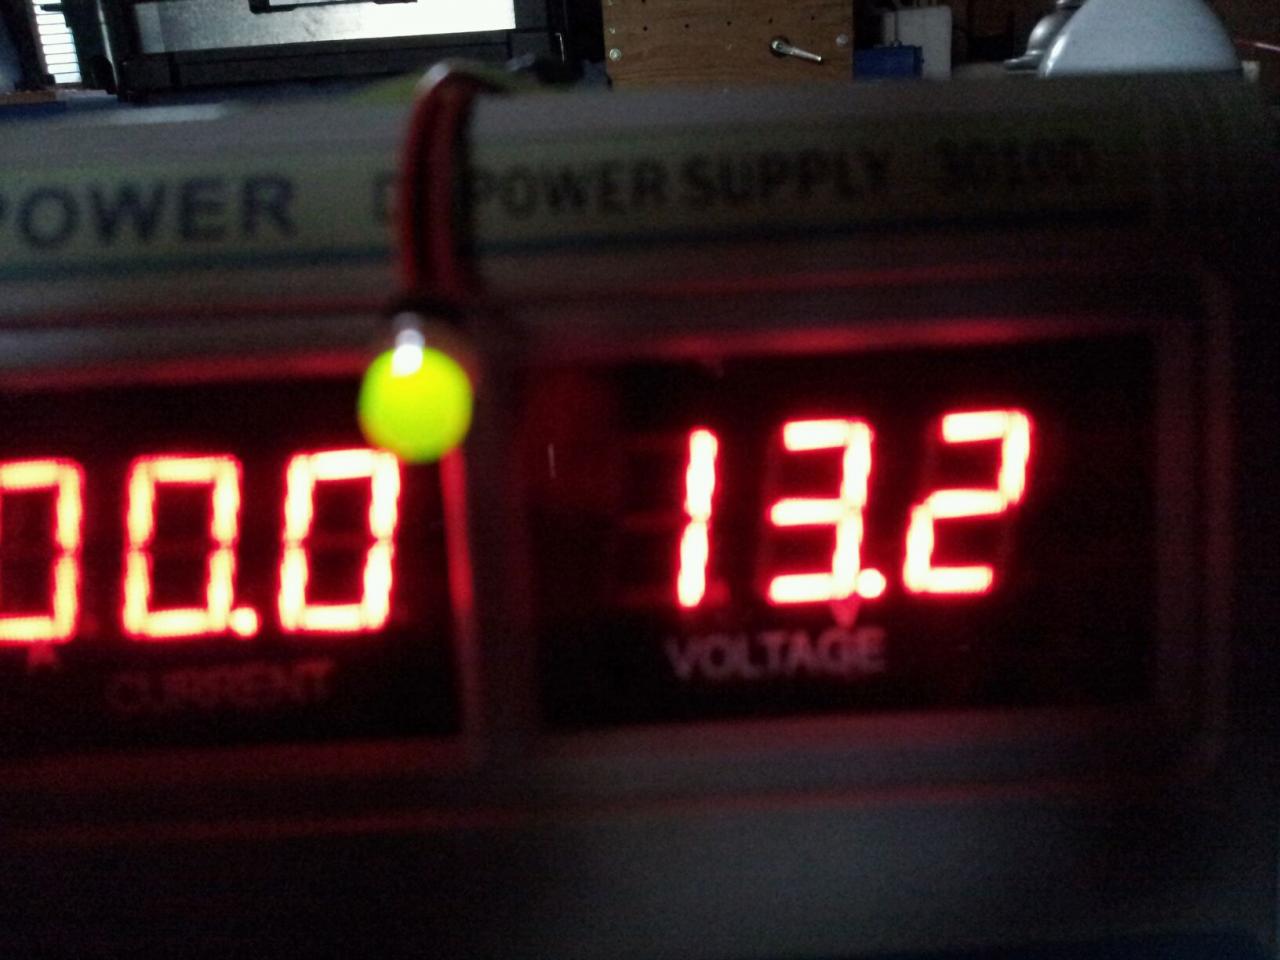 LED voltage monitor.  Starts displaying green at 13.2 vdc